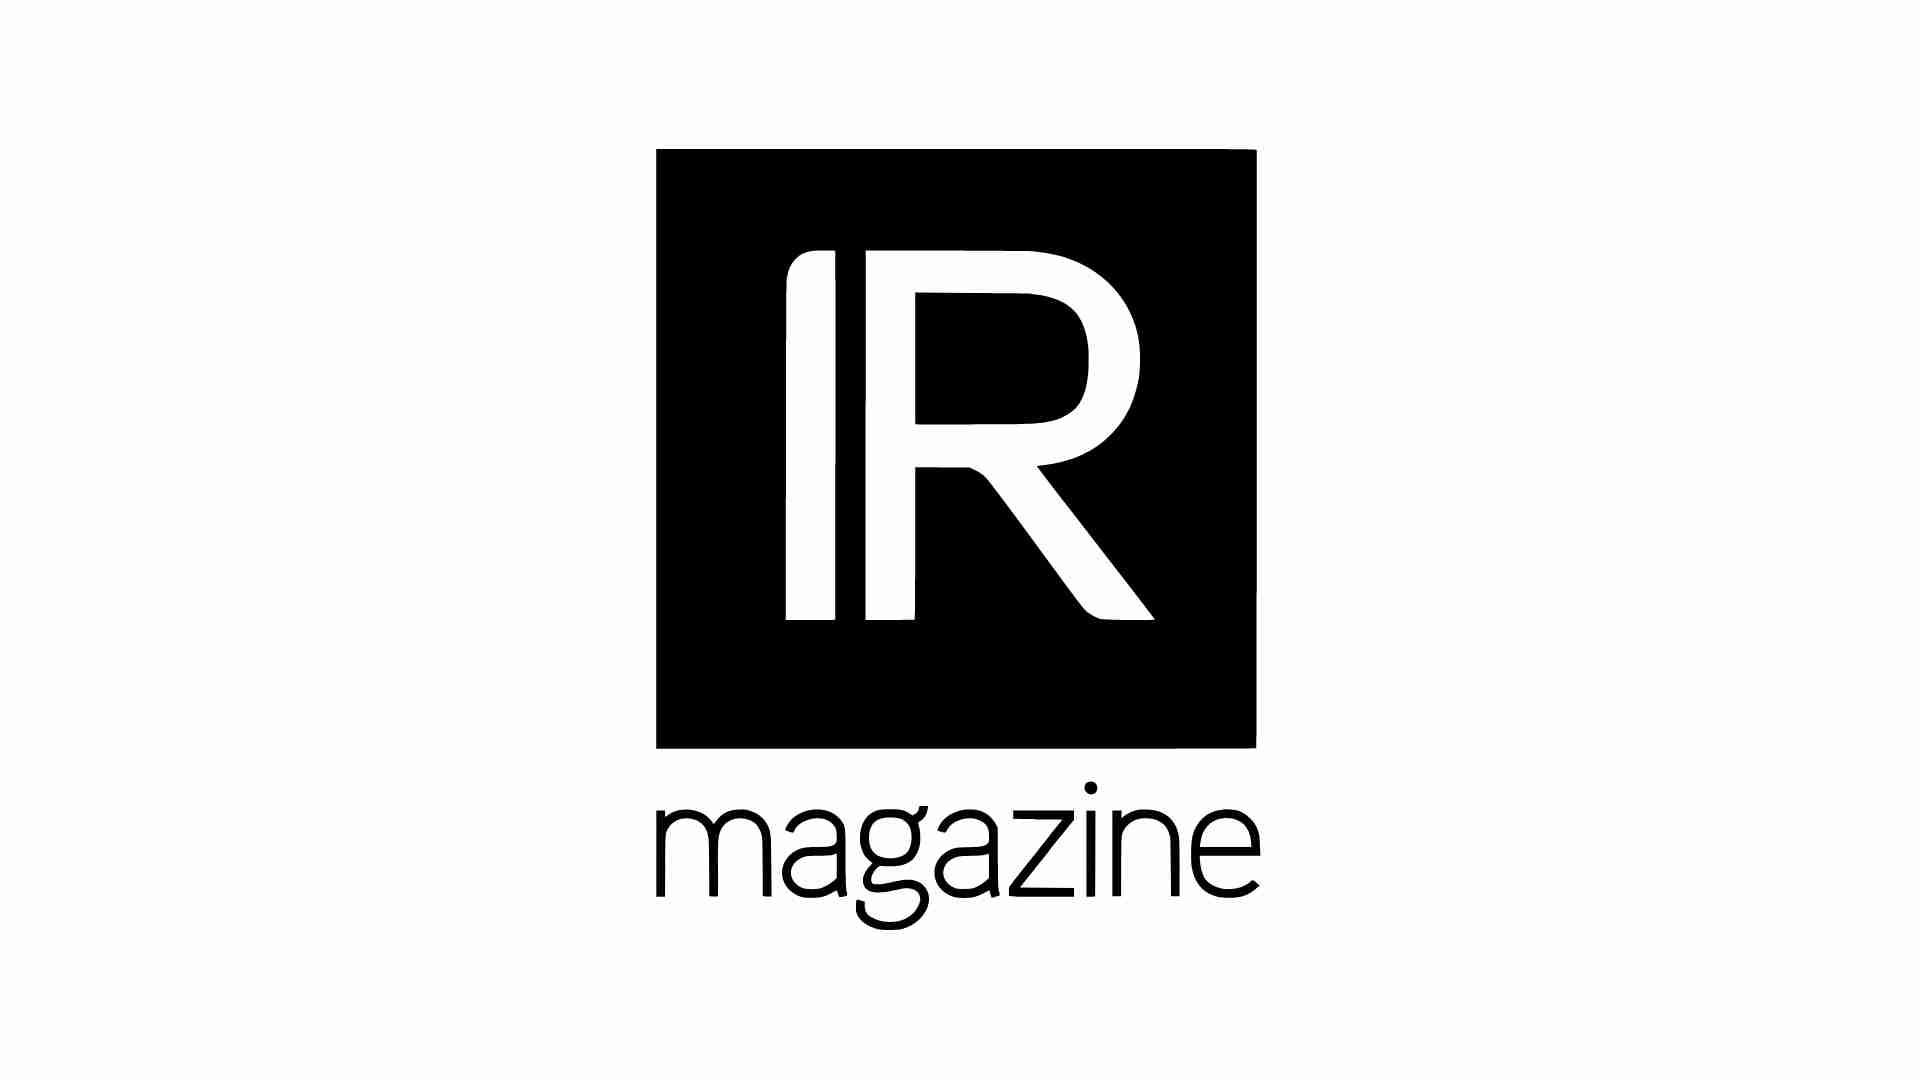 IR Magazine logo